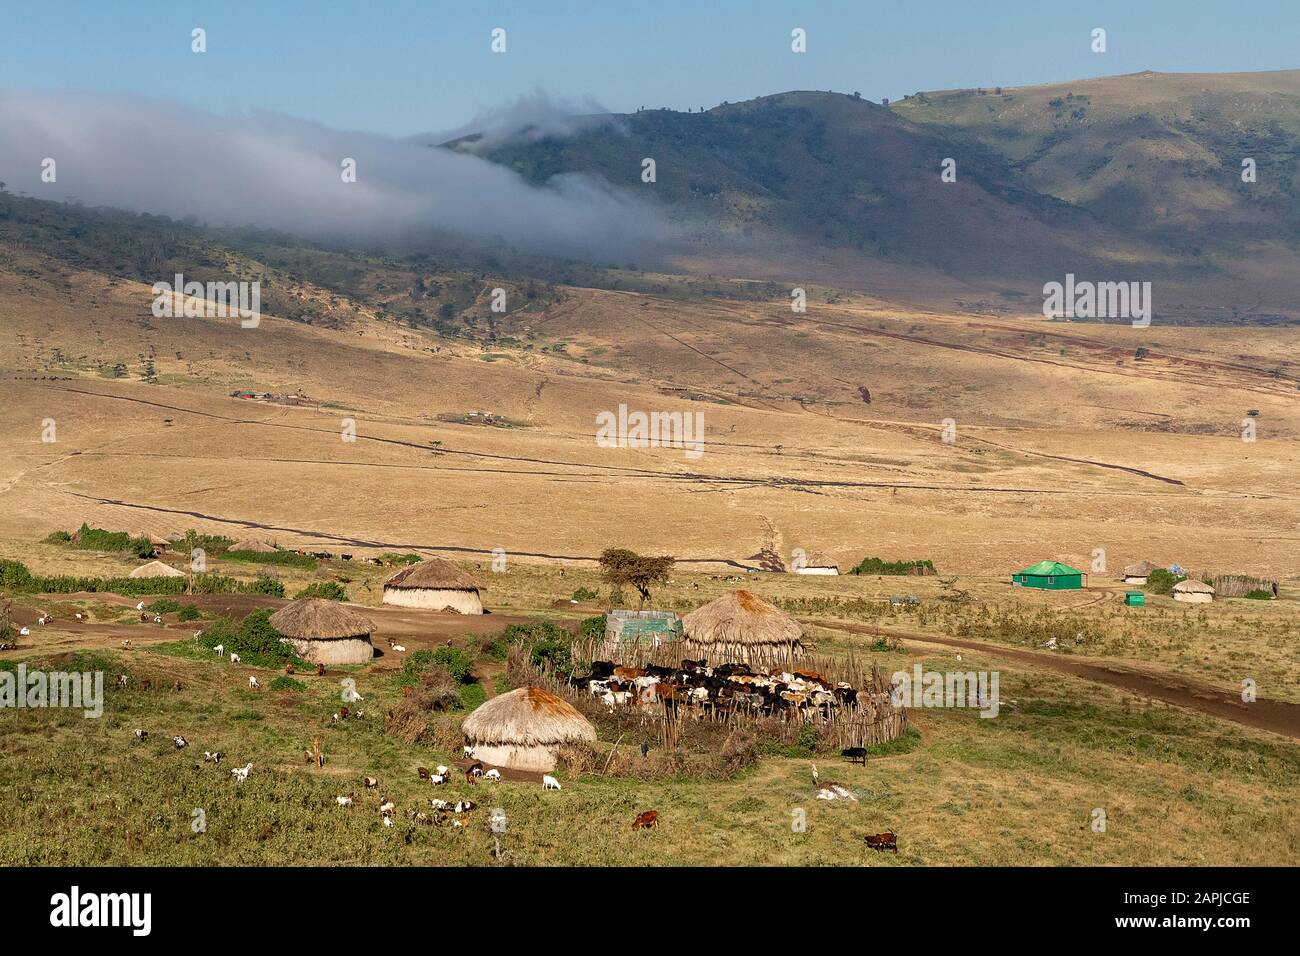 Village scene in Tanzania, Africa Stock Photo